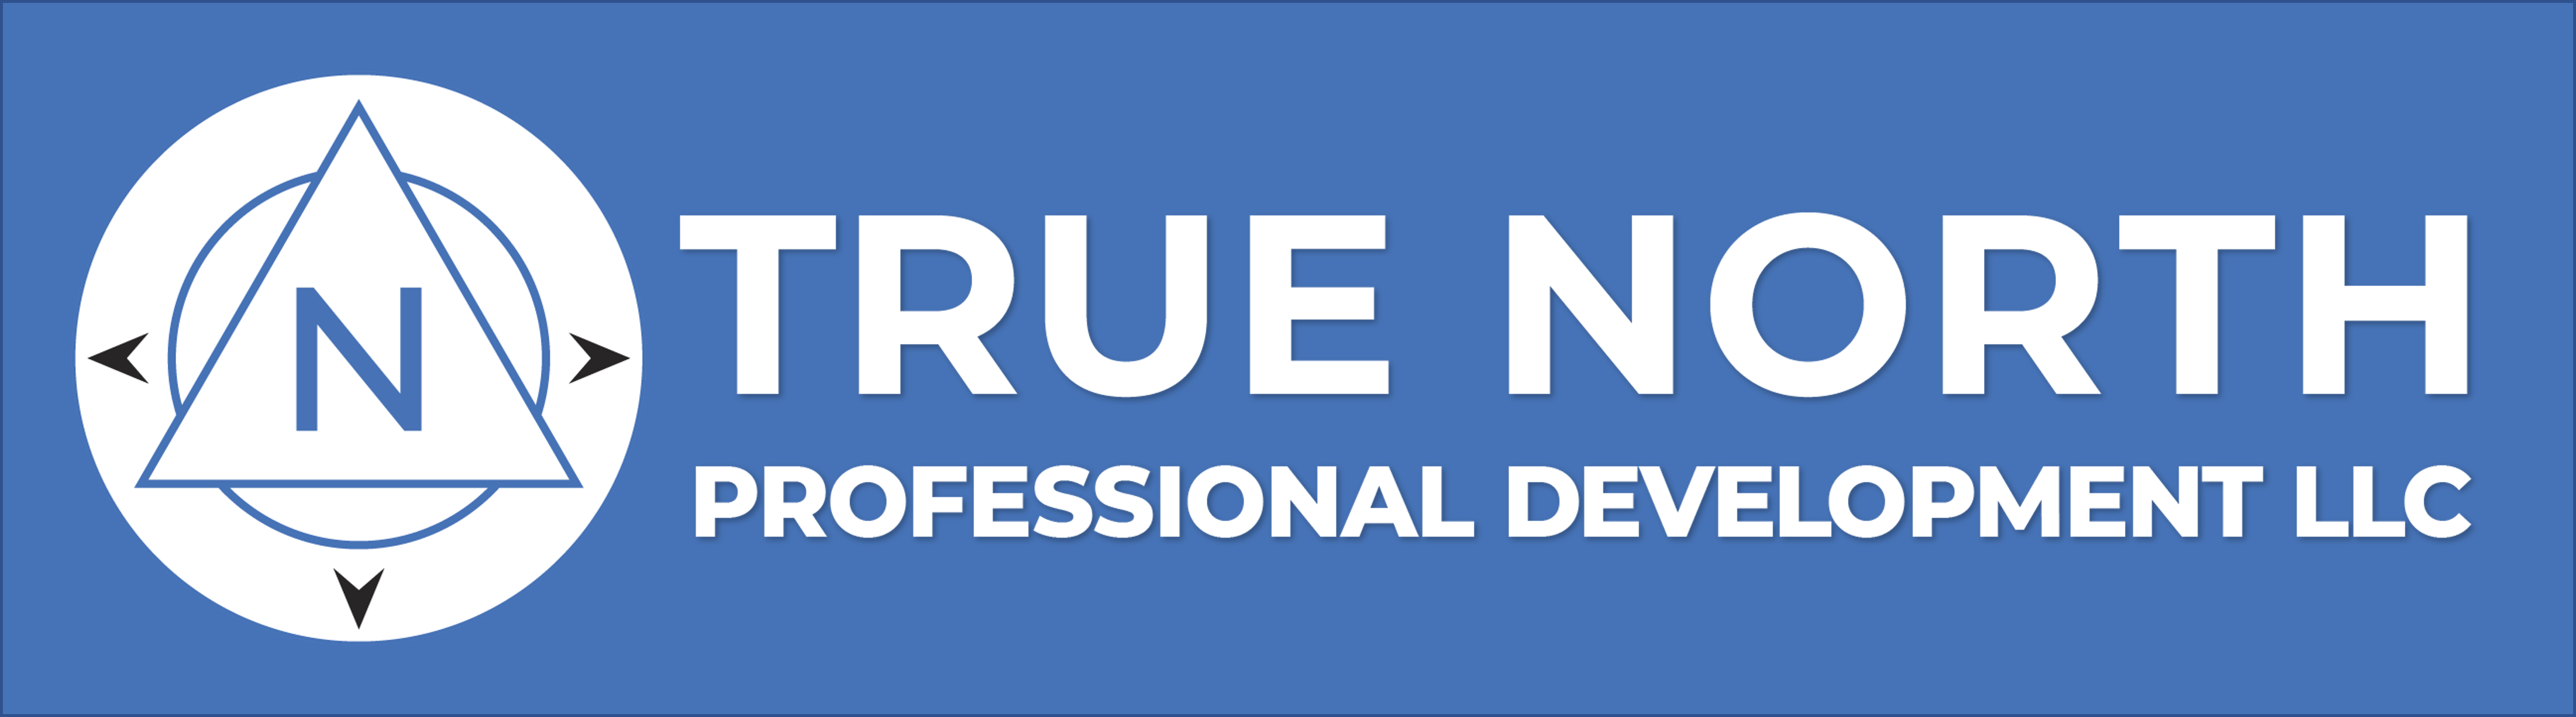 True North Professional Development LLC